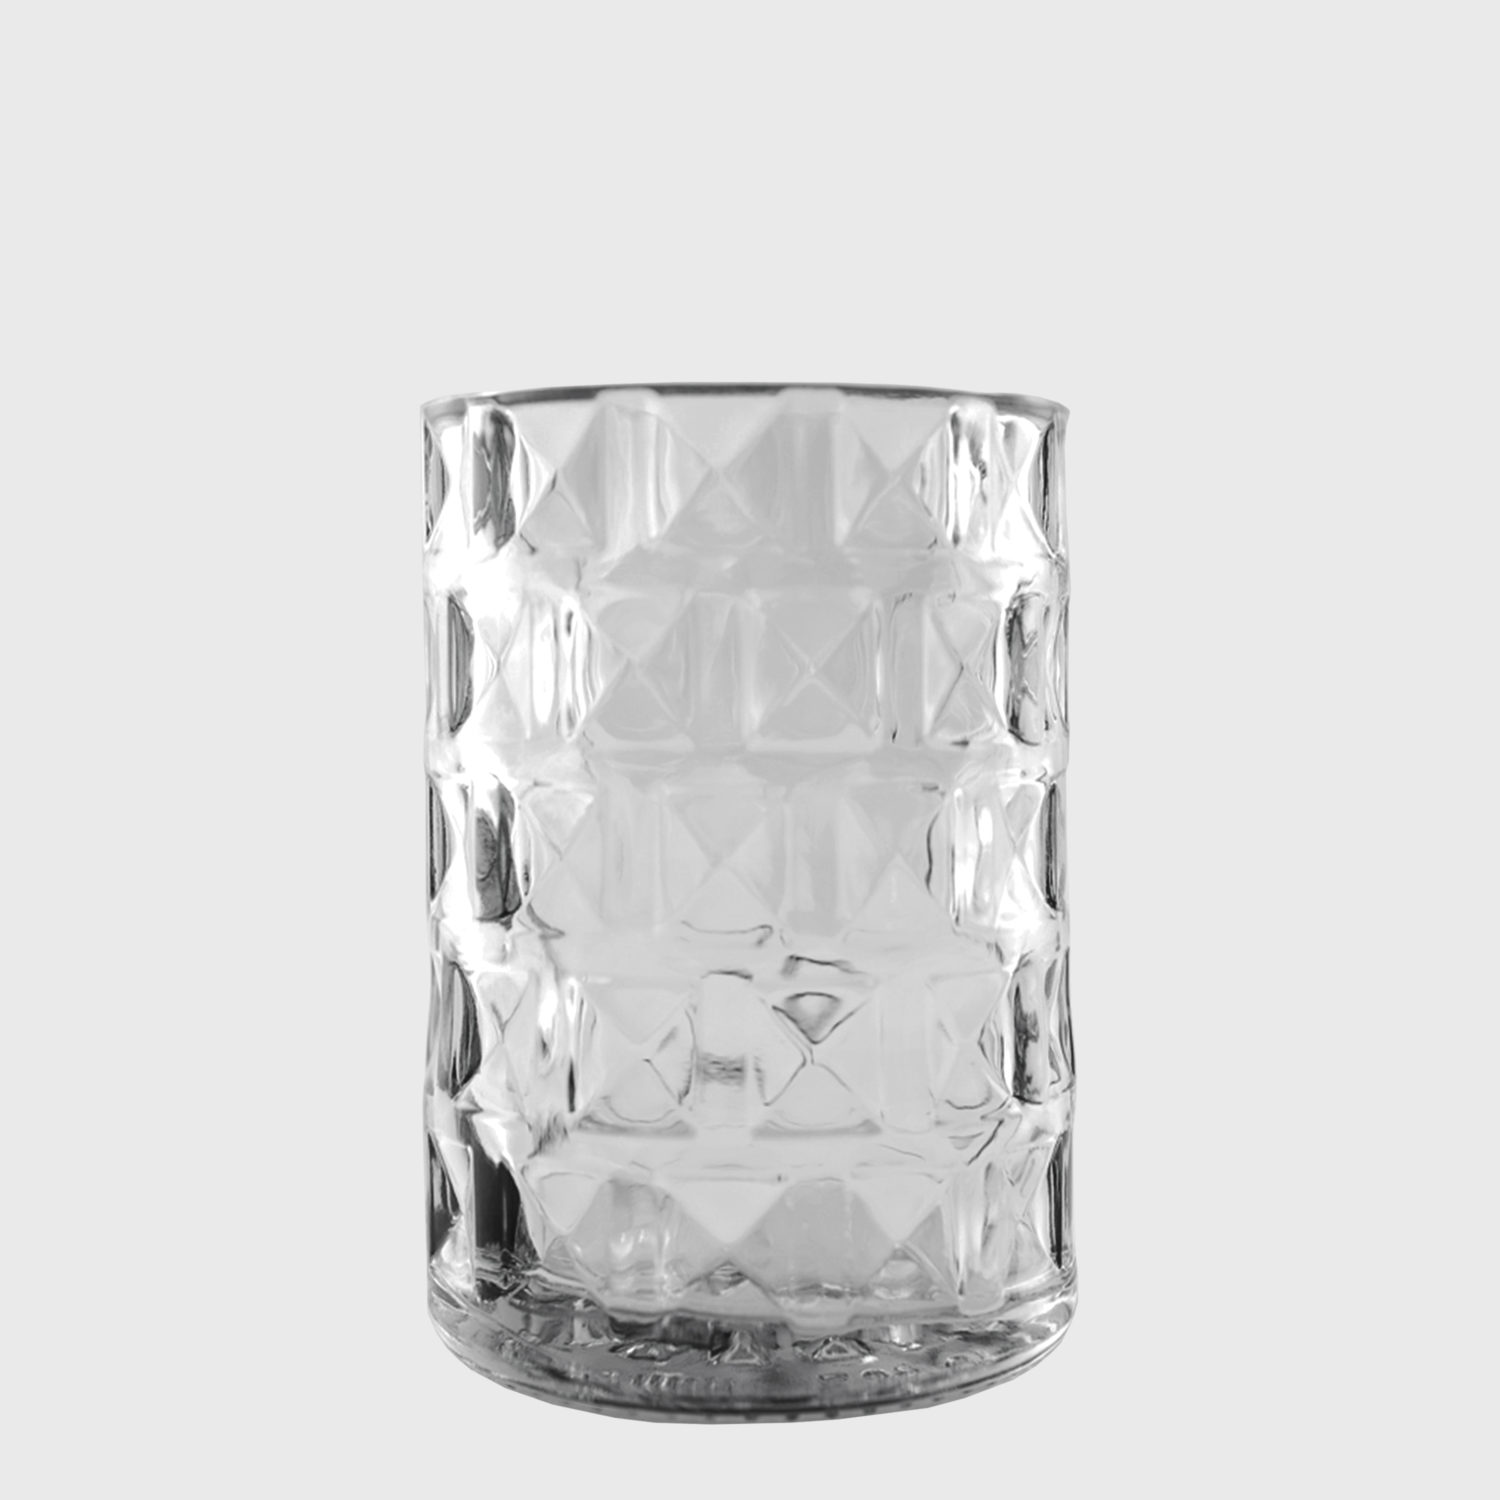 Wodkaglas Oelde handgefertigt glas upcycling recycling